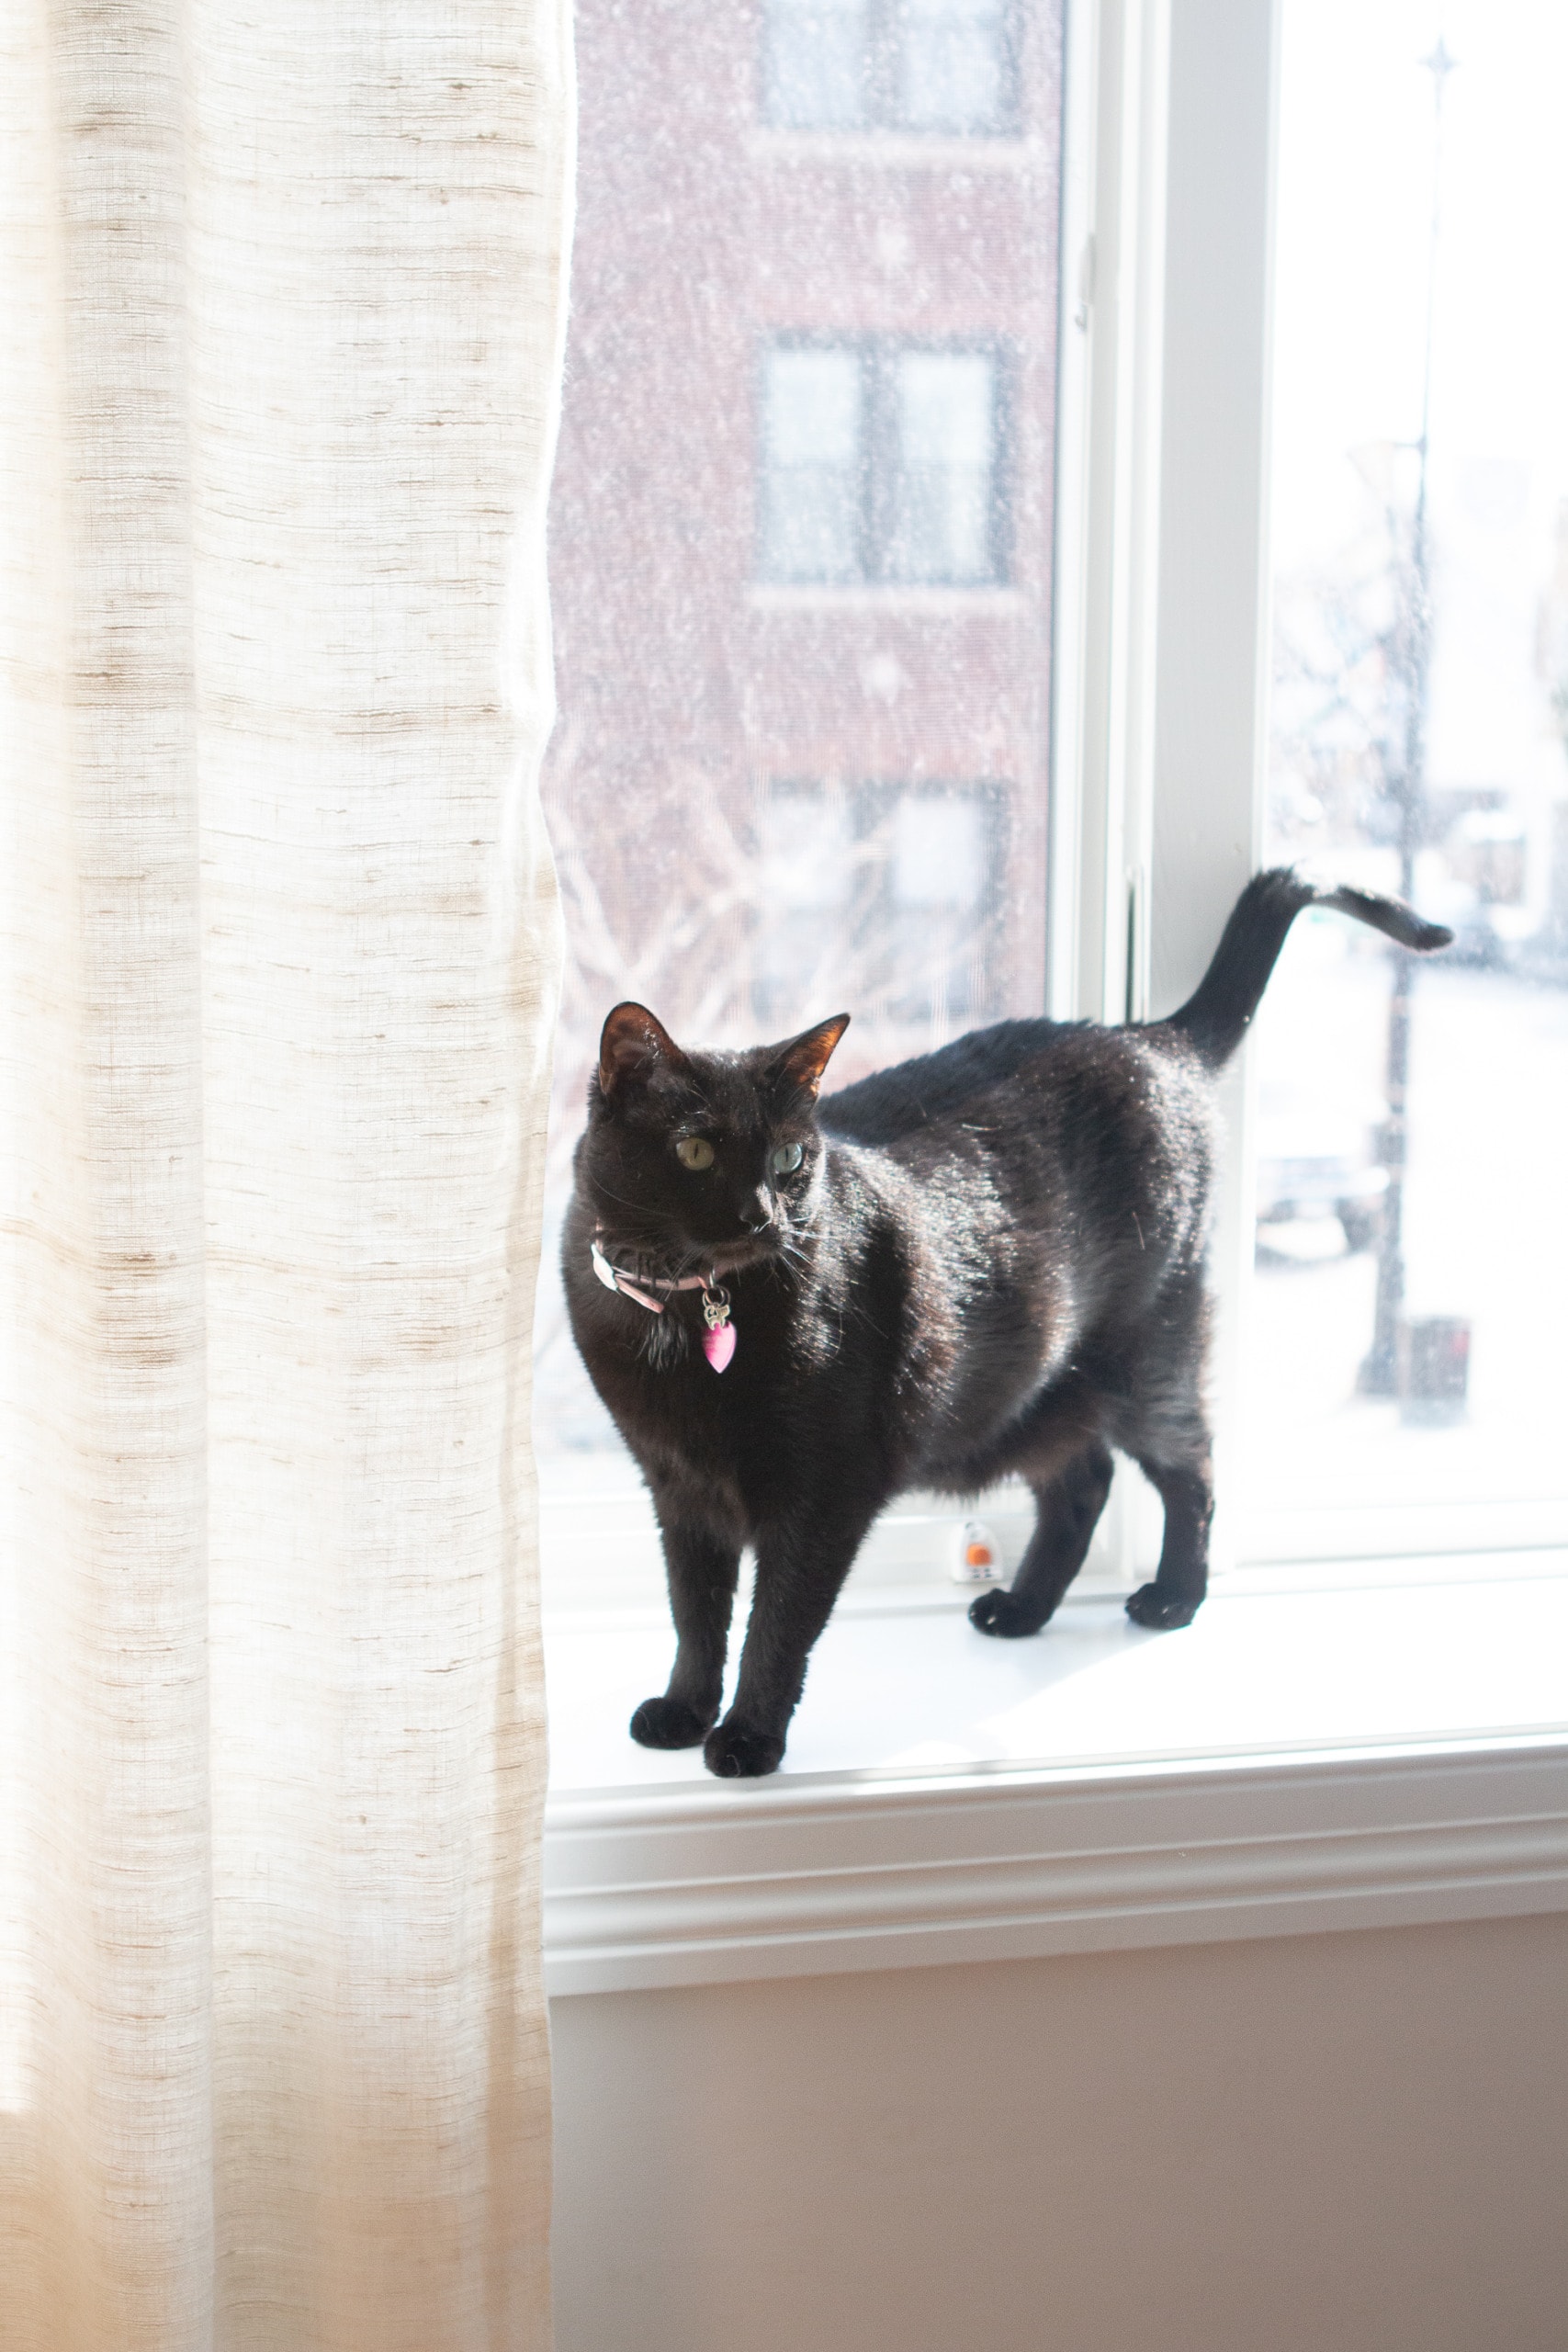 Black cat in a window sill